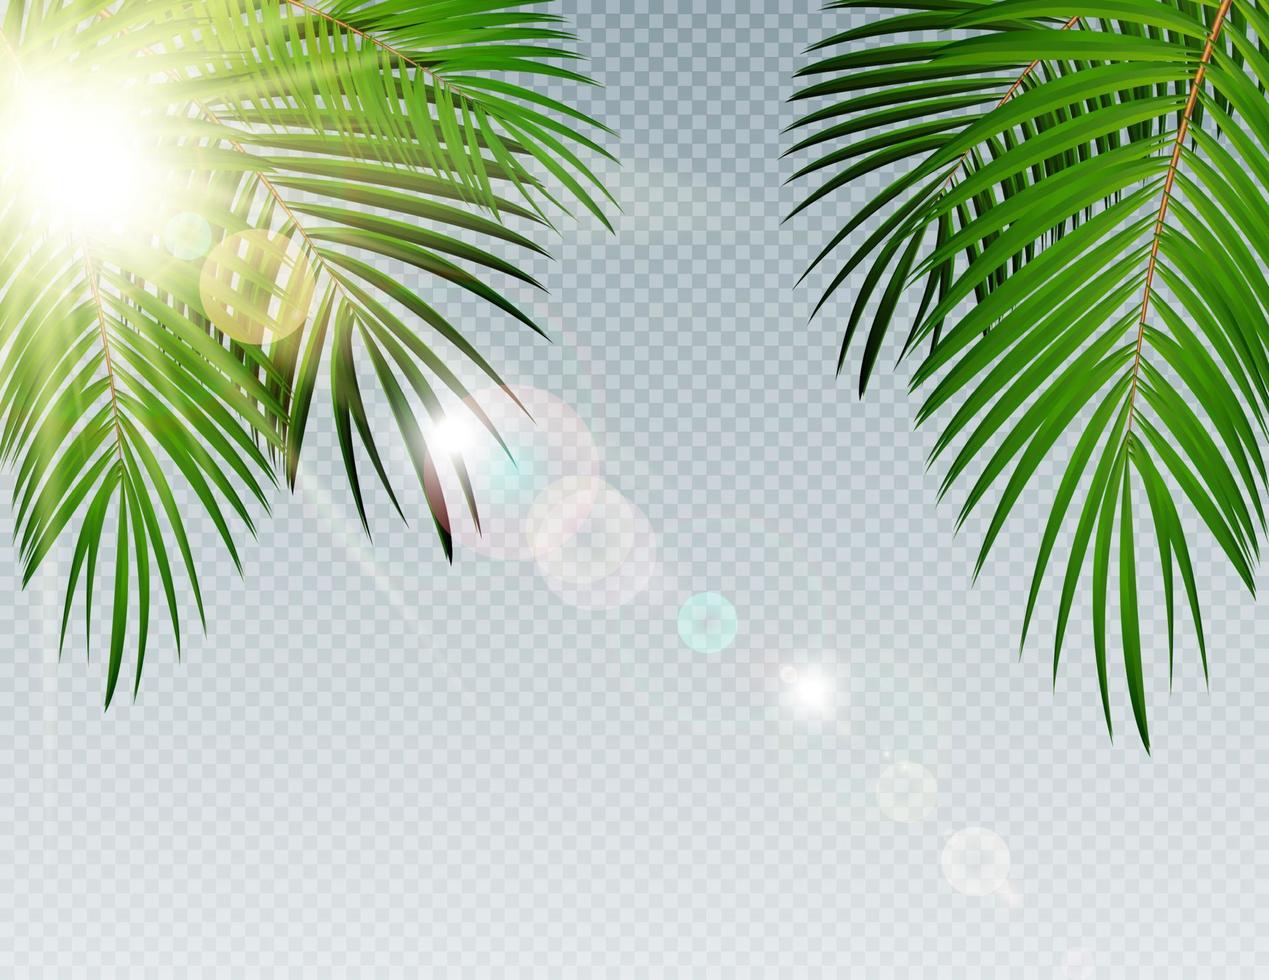 sommartid palmblad med solbränd på transparent vektor bakgrundsillustration